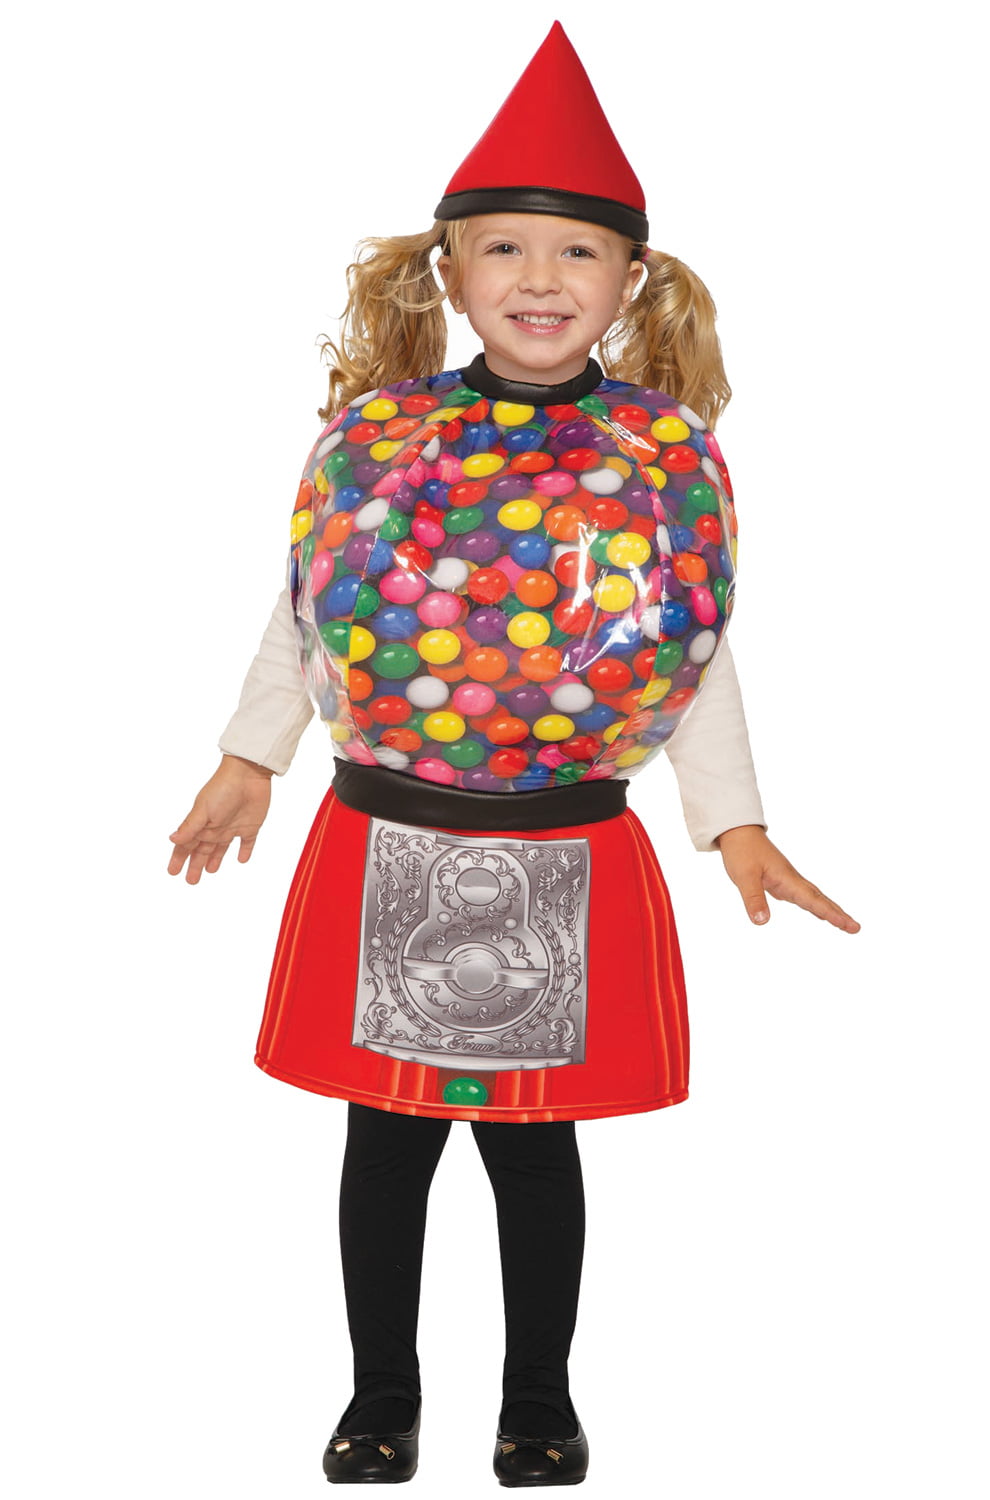  Gumball  Machine  Toddler Costume  Walmart com Walmart com